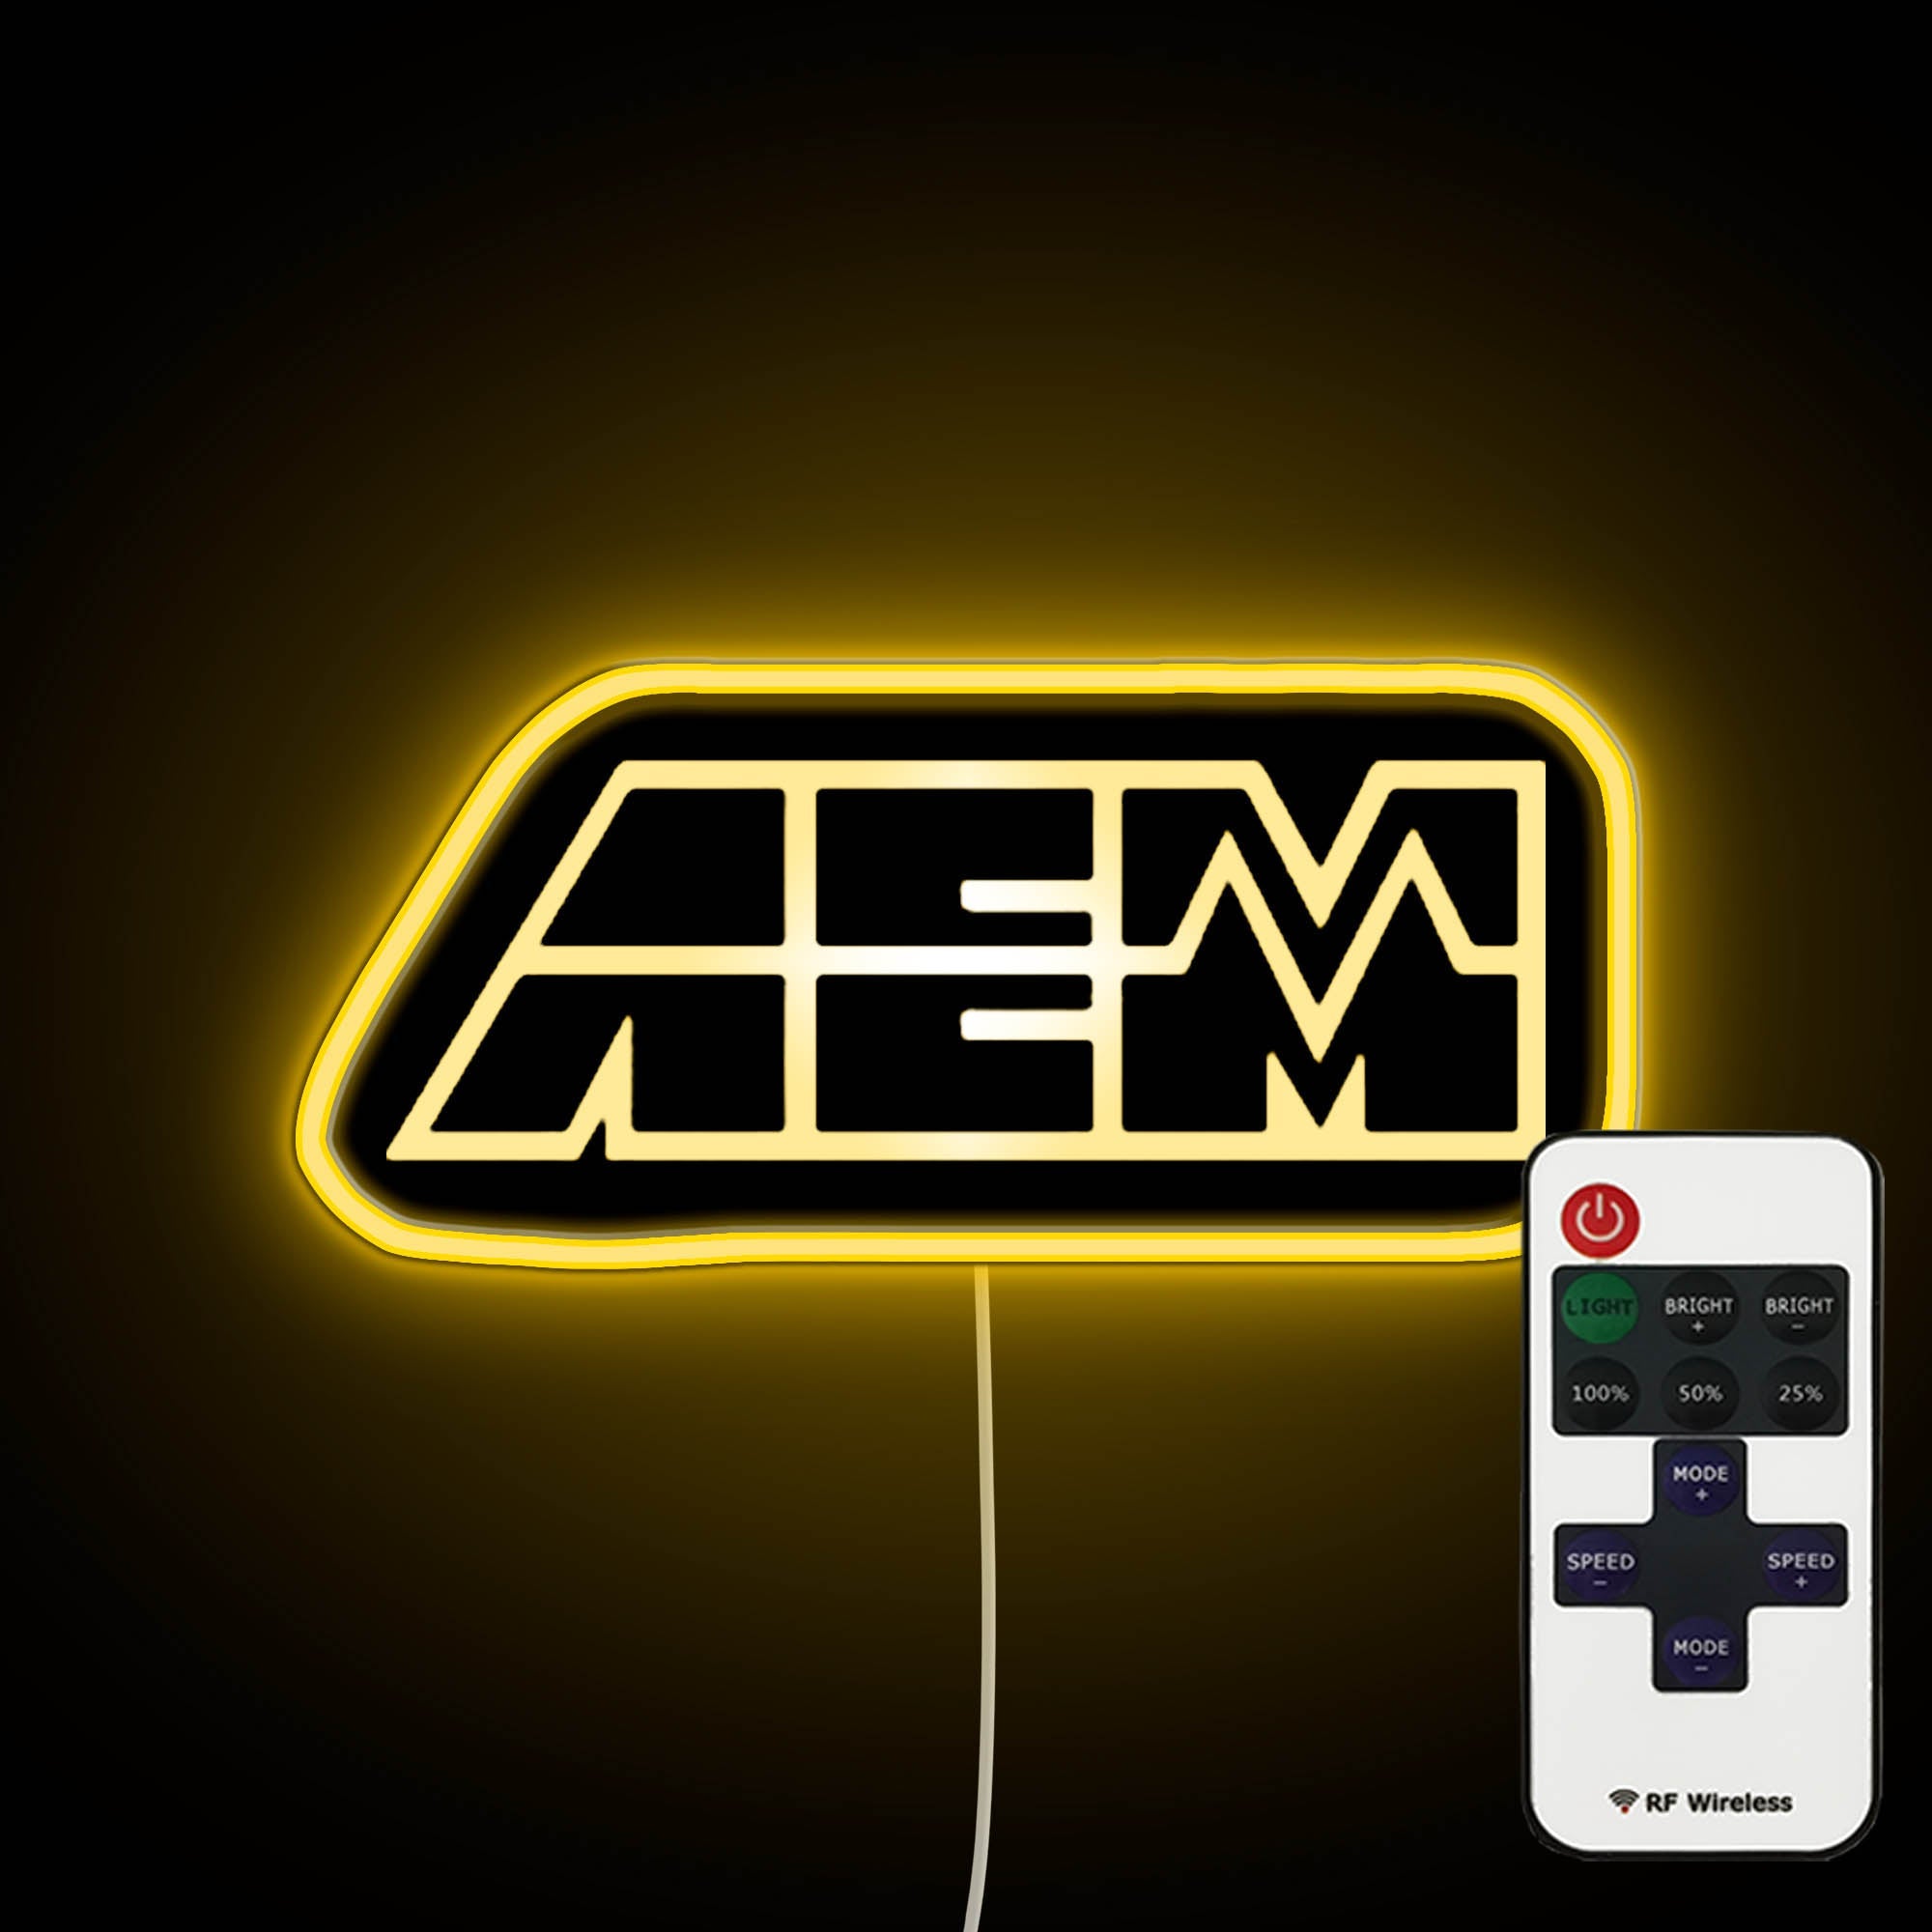 aem electronics logo